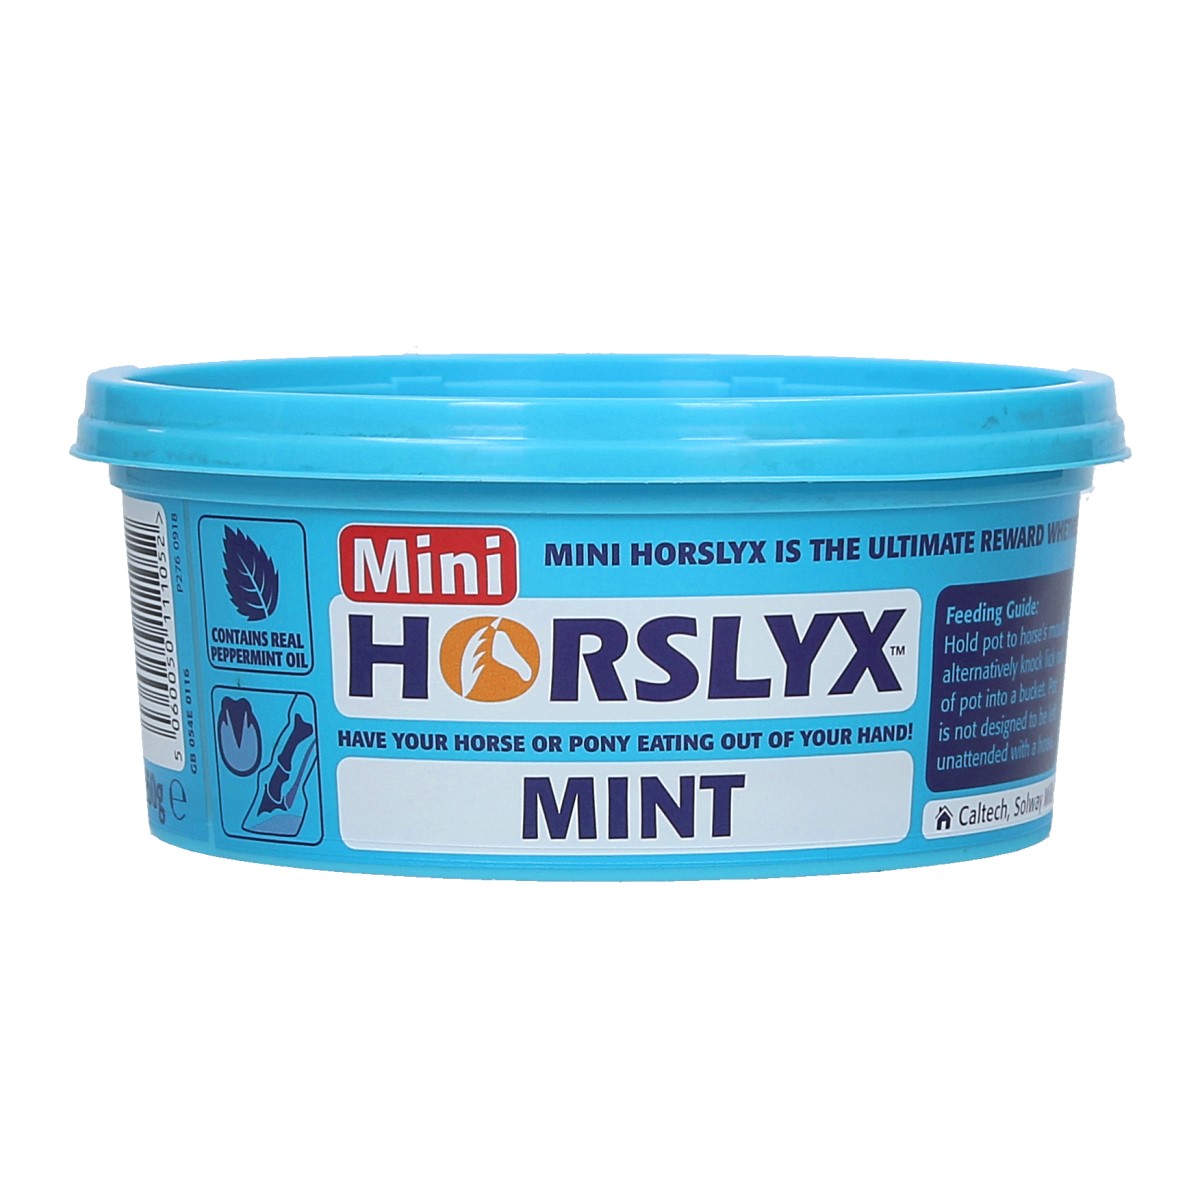 Liksteen Horslyx Mint Overige, 5 KILO